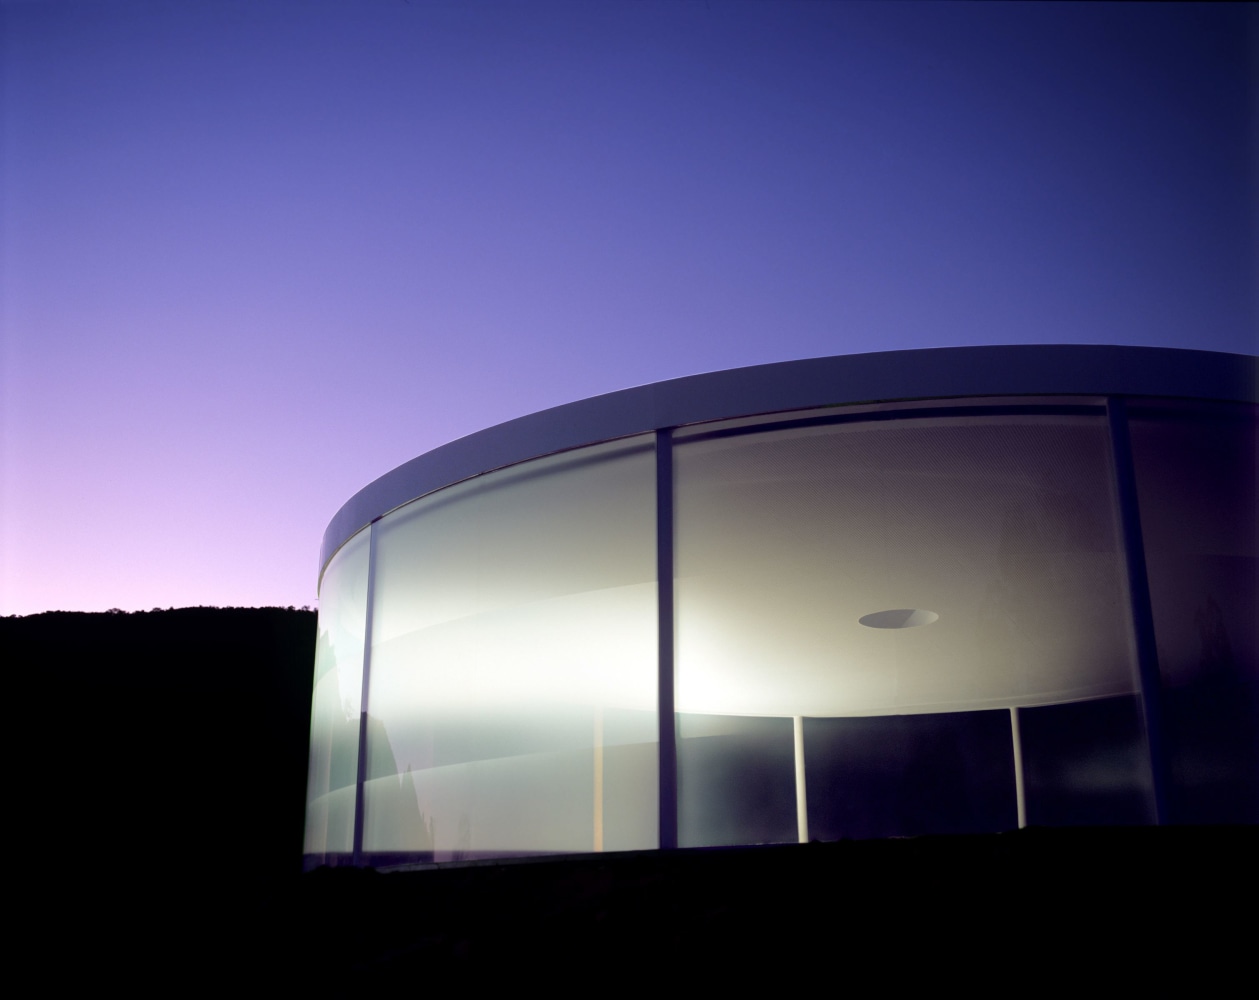 Doug Aitken

Sonic Pavilion

2009

Concrete, steel, and glass site-specific outdoor installation, Inhotim Contemporary Art Center, Brumadinho, Brazil

46 ft. diam. &amp;times; 13.8 ft. above grade&amp;nbsp;

(14 m diam. &amp;times; 4.2 m above grade)

DA 361